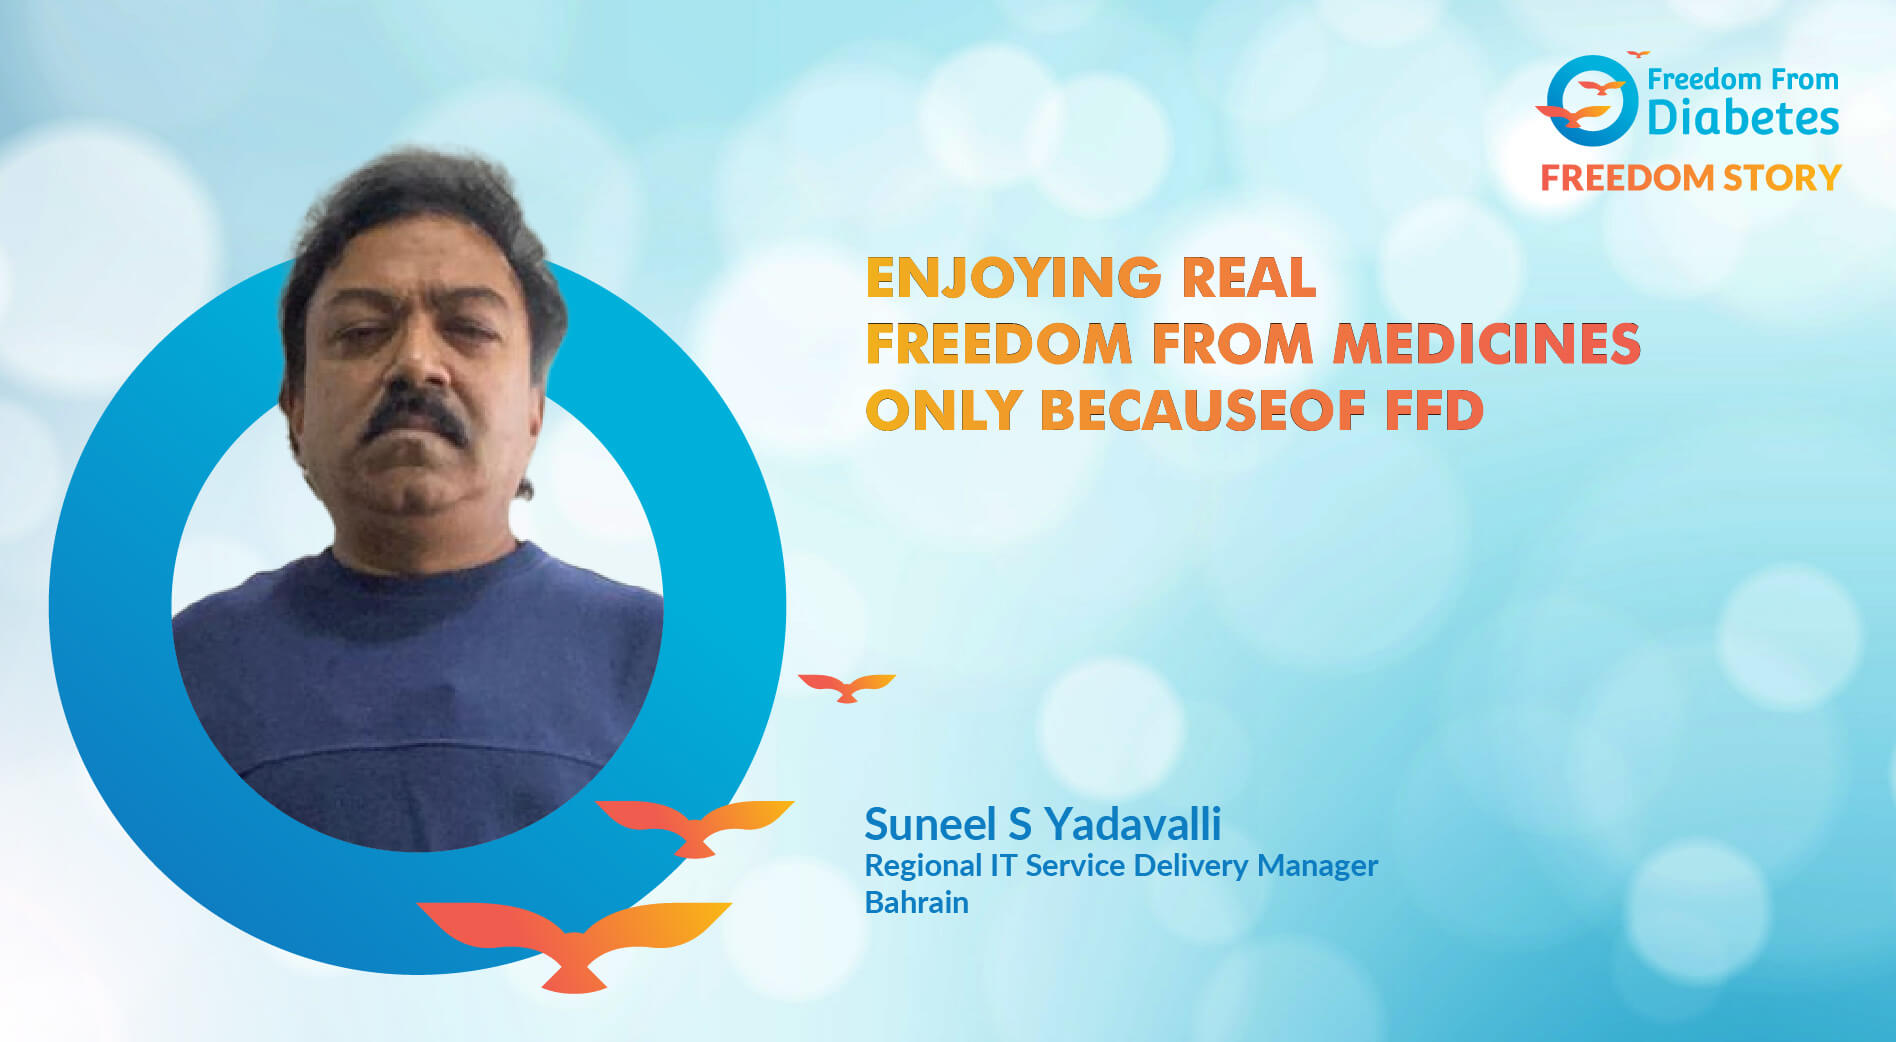 Suneel S Yadavalli: Enjoying real freedom from medicines